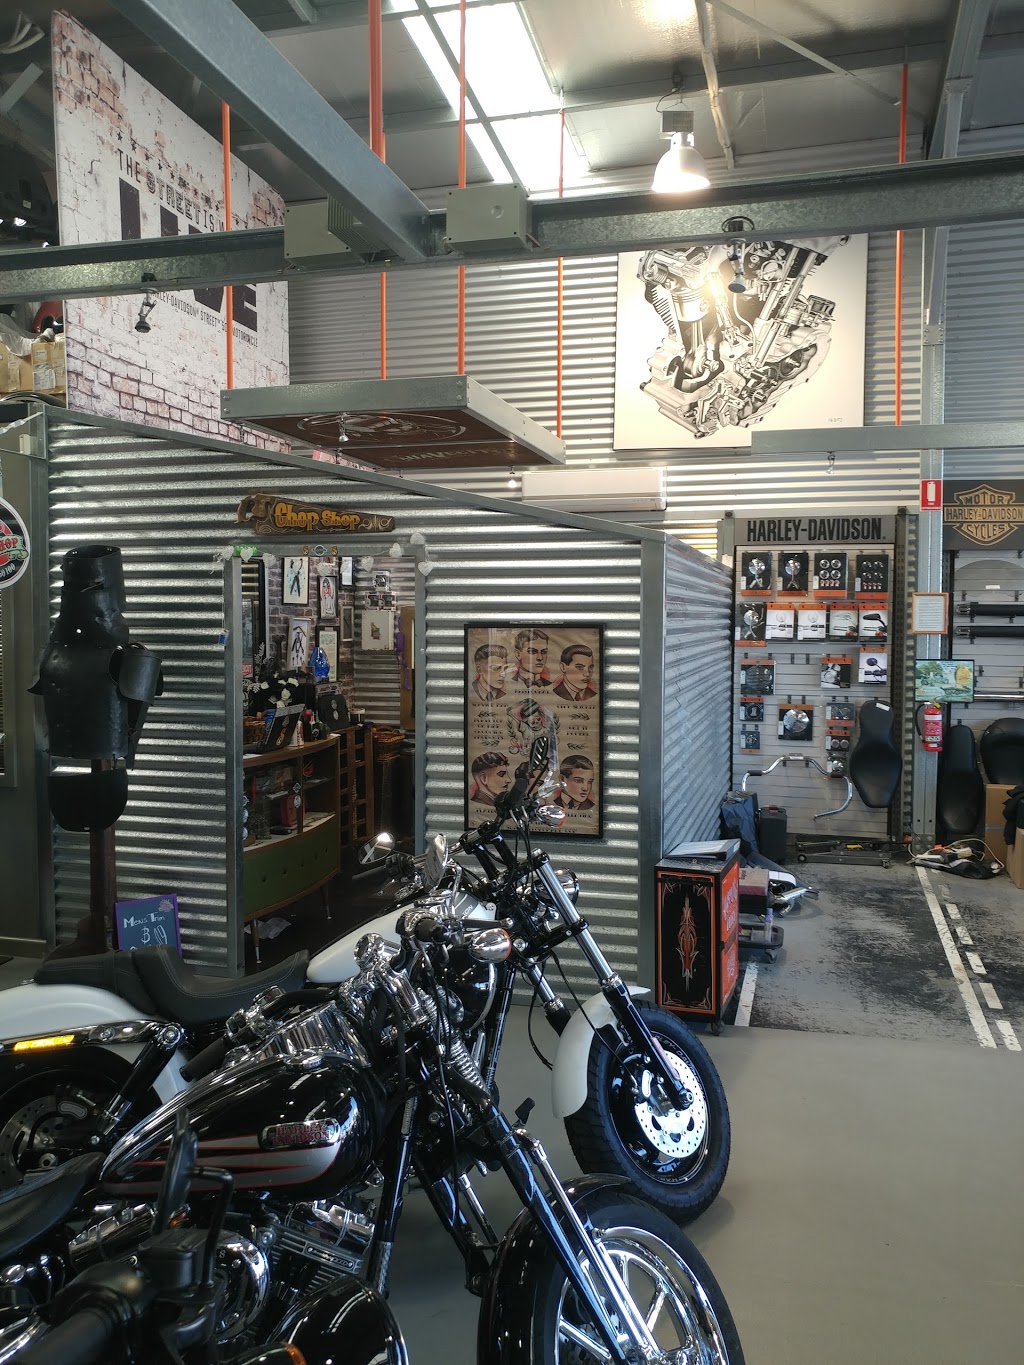 Phils Garage Harley Davidson 401 Wagga Rd Lavington Nsw 2641 Australia